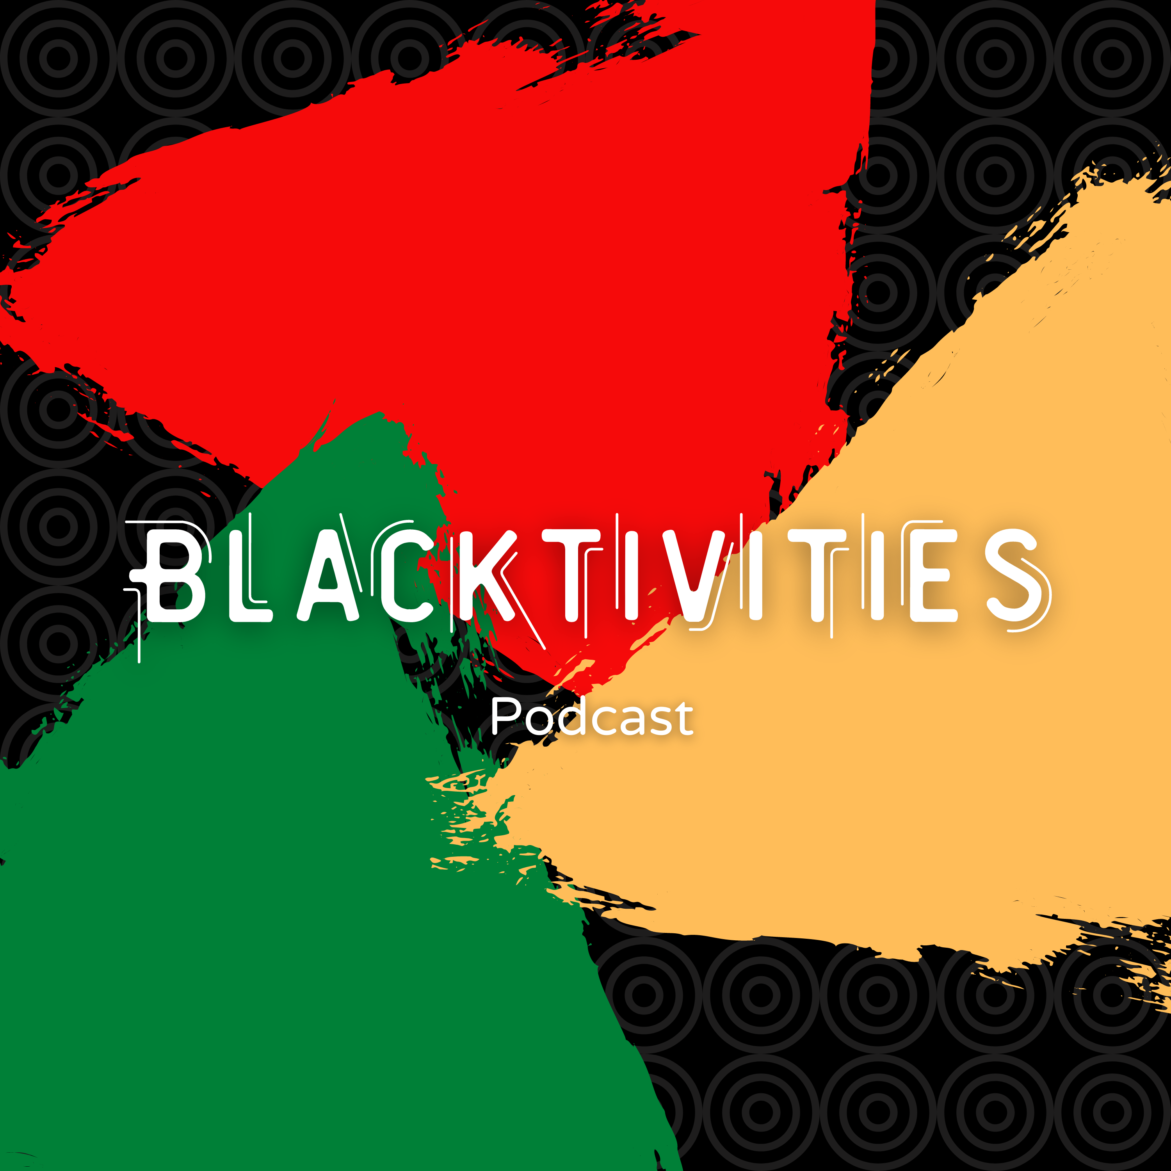 Black Podcasting - Dating While Black